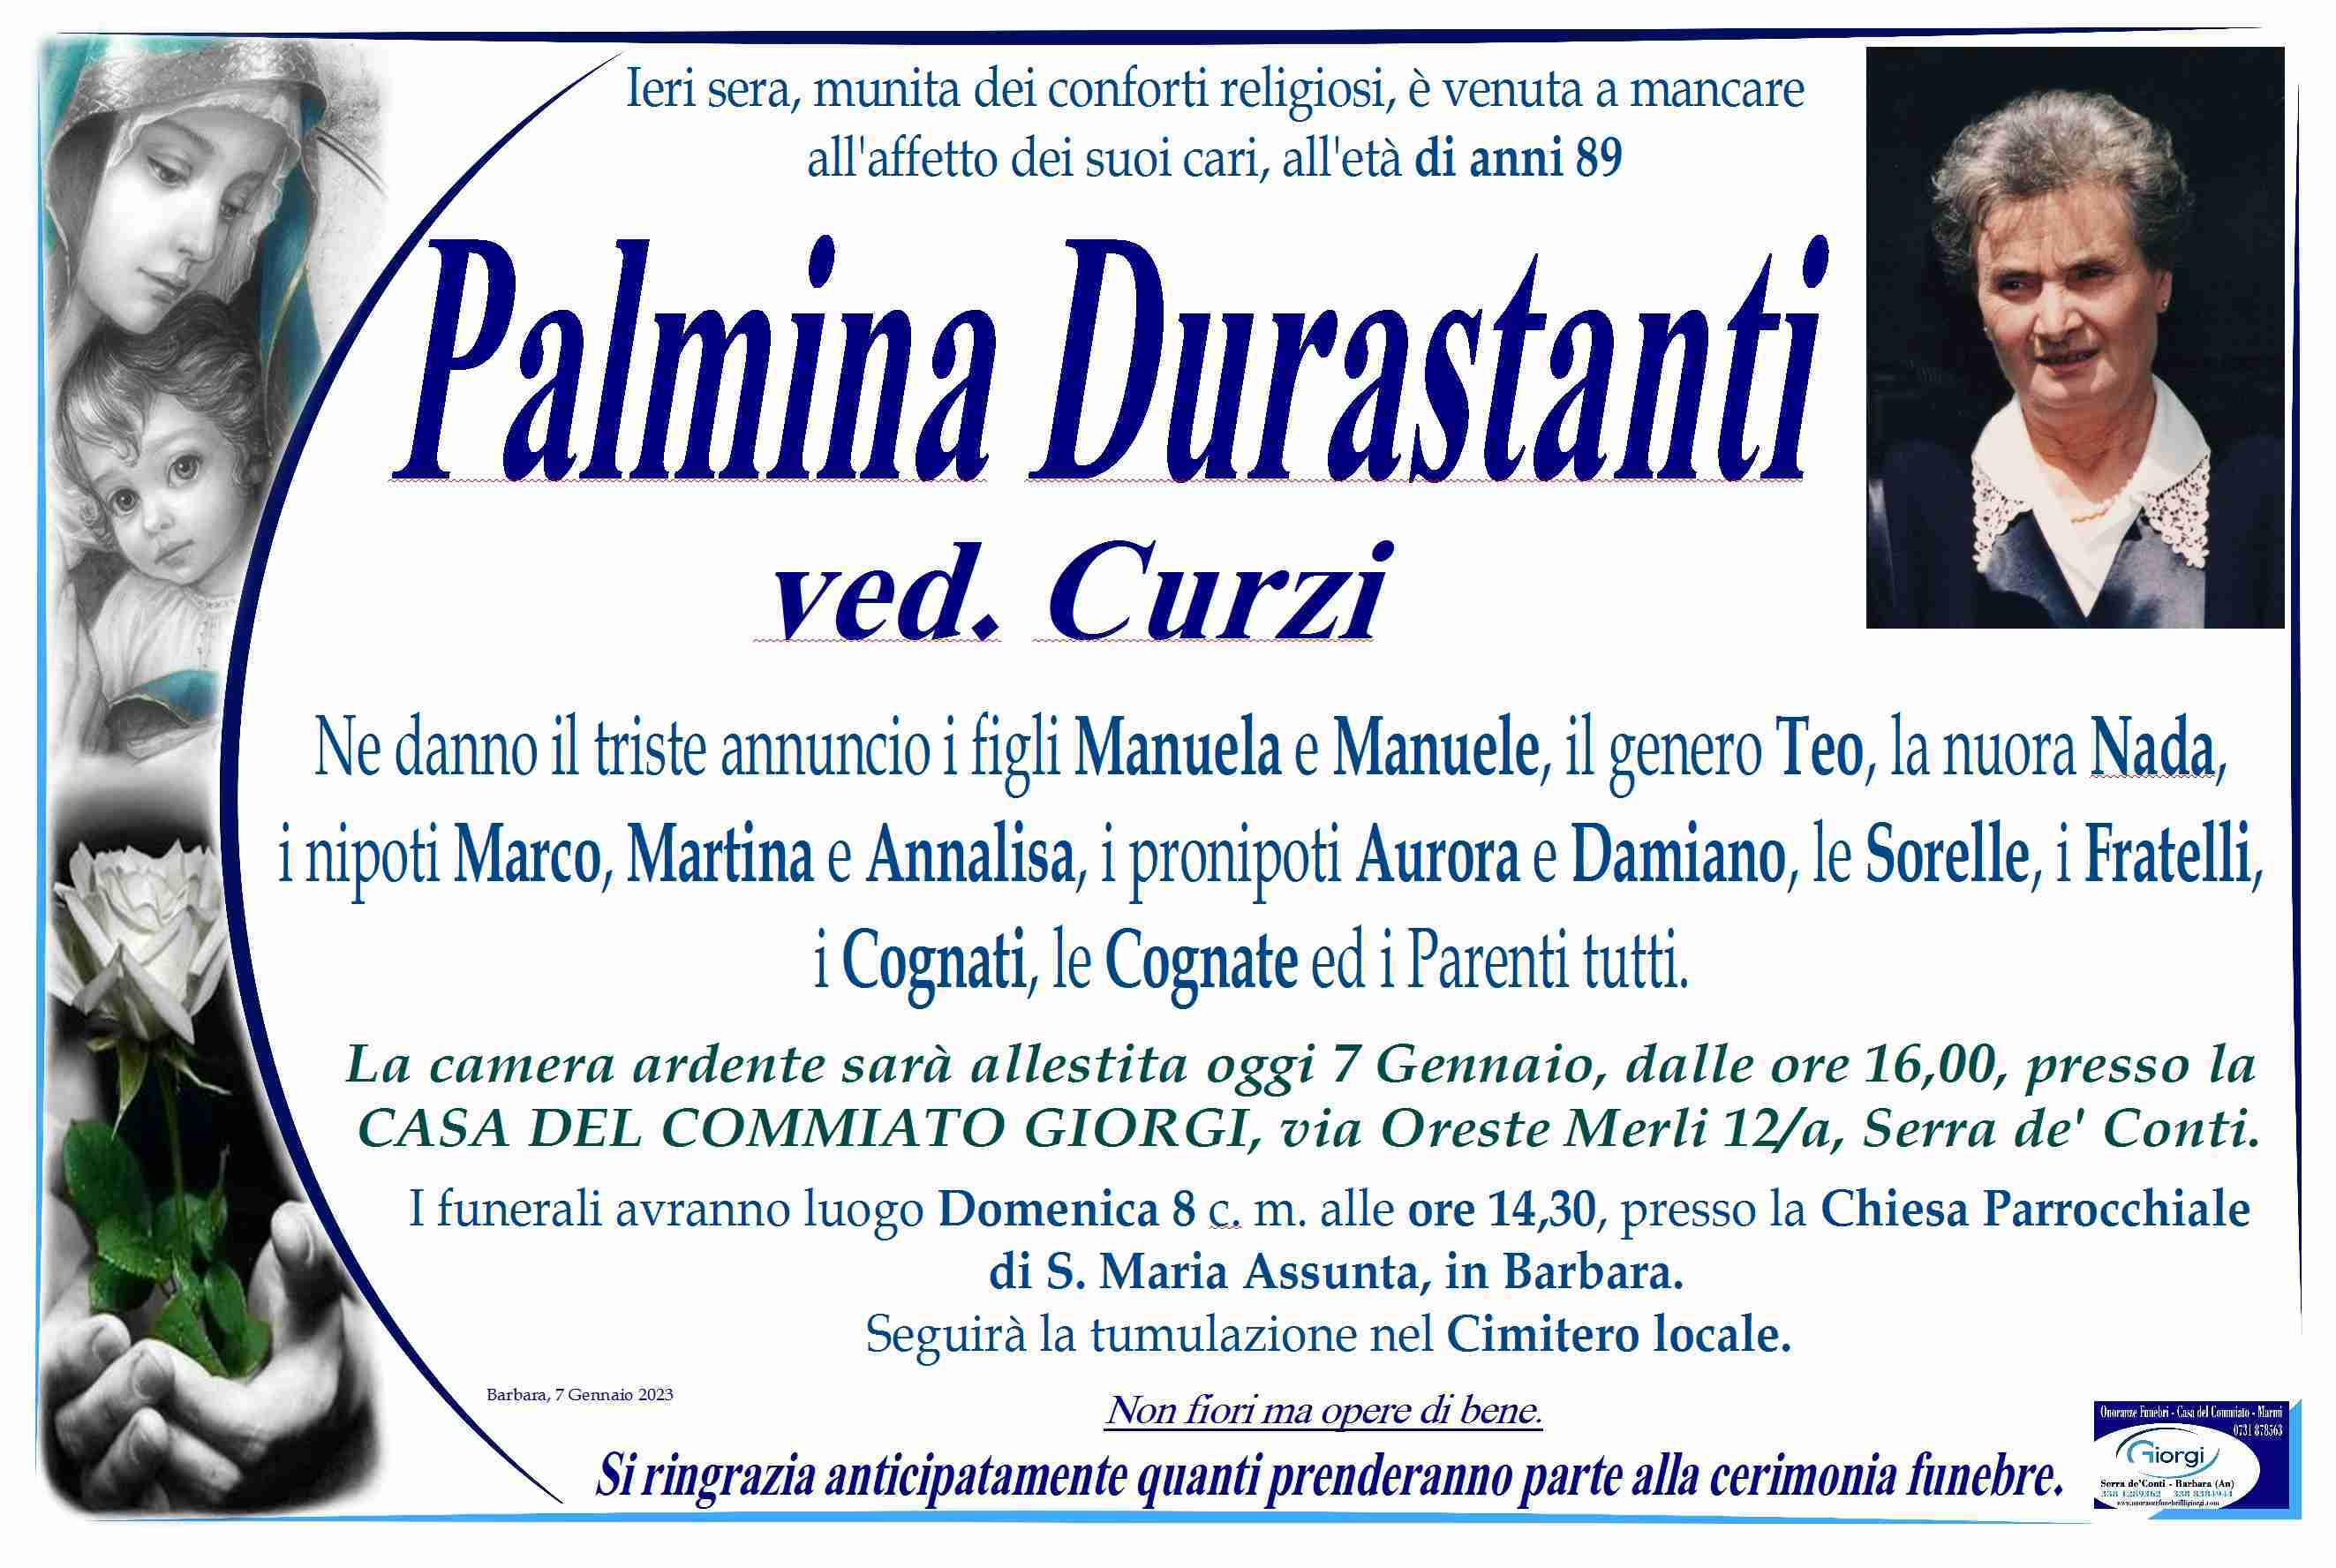 Palmina Durastanti